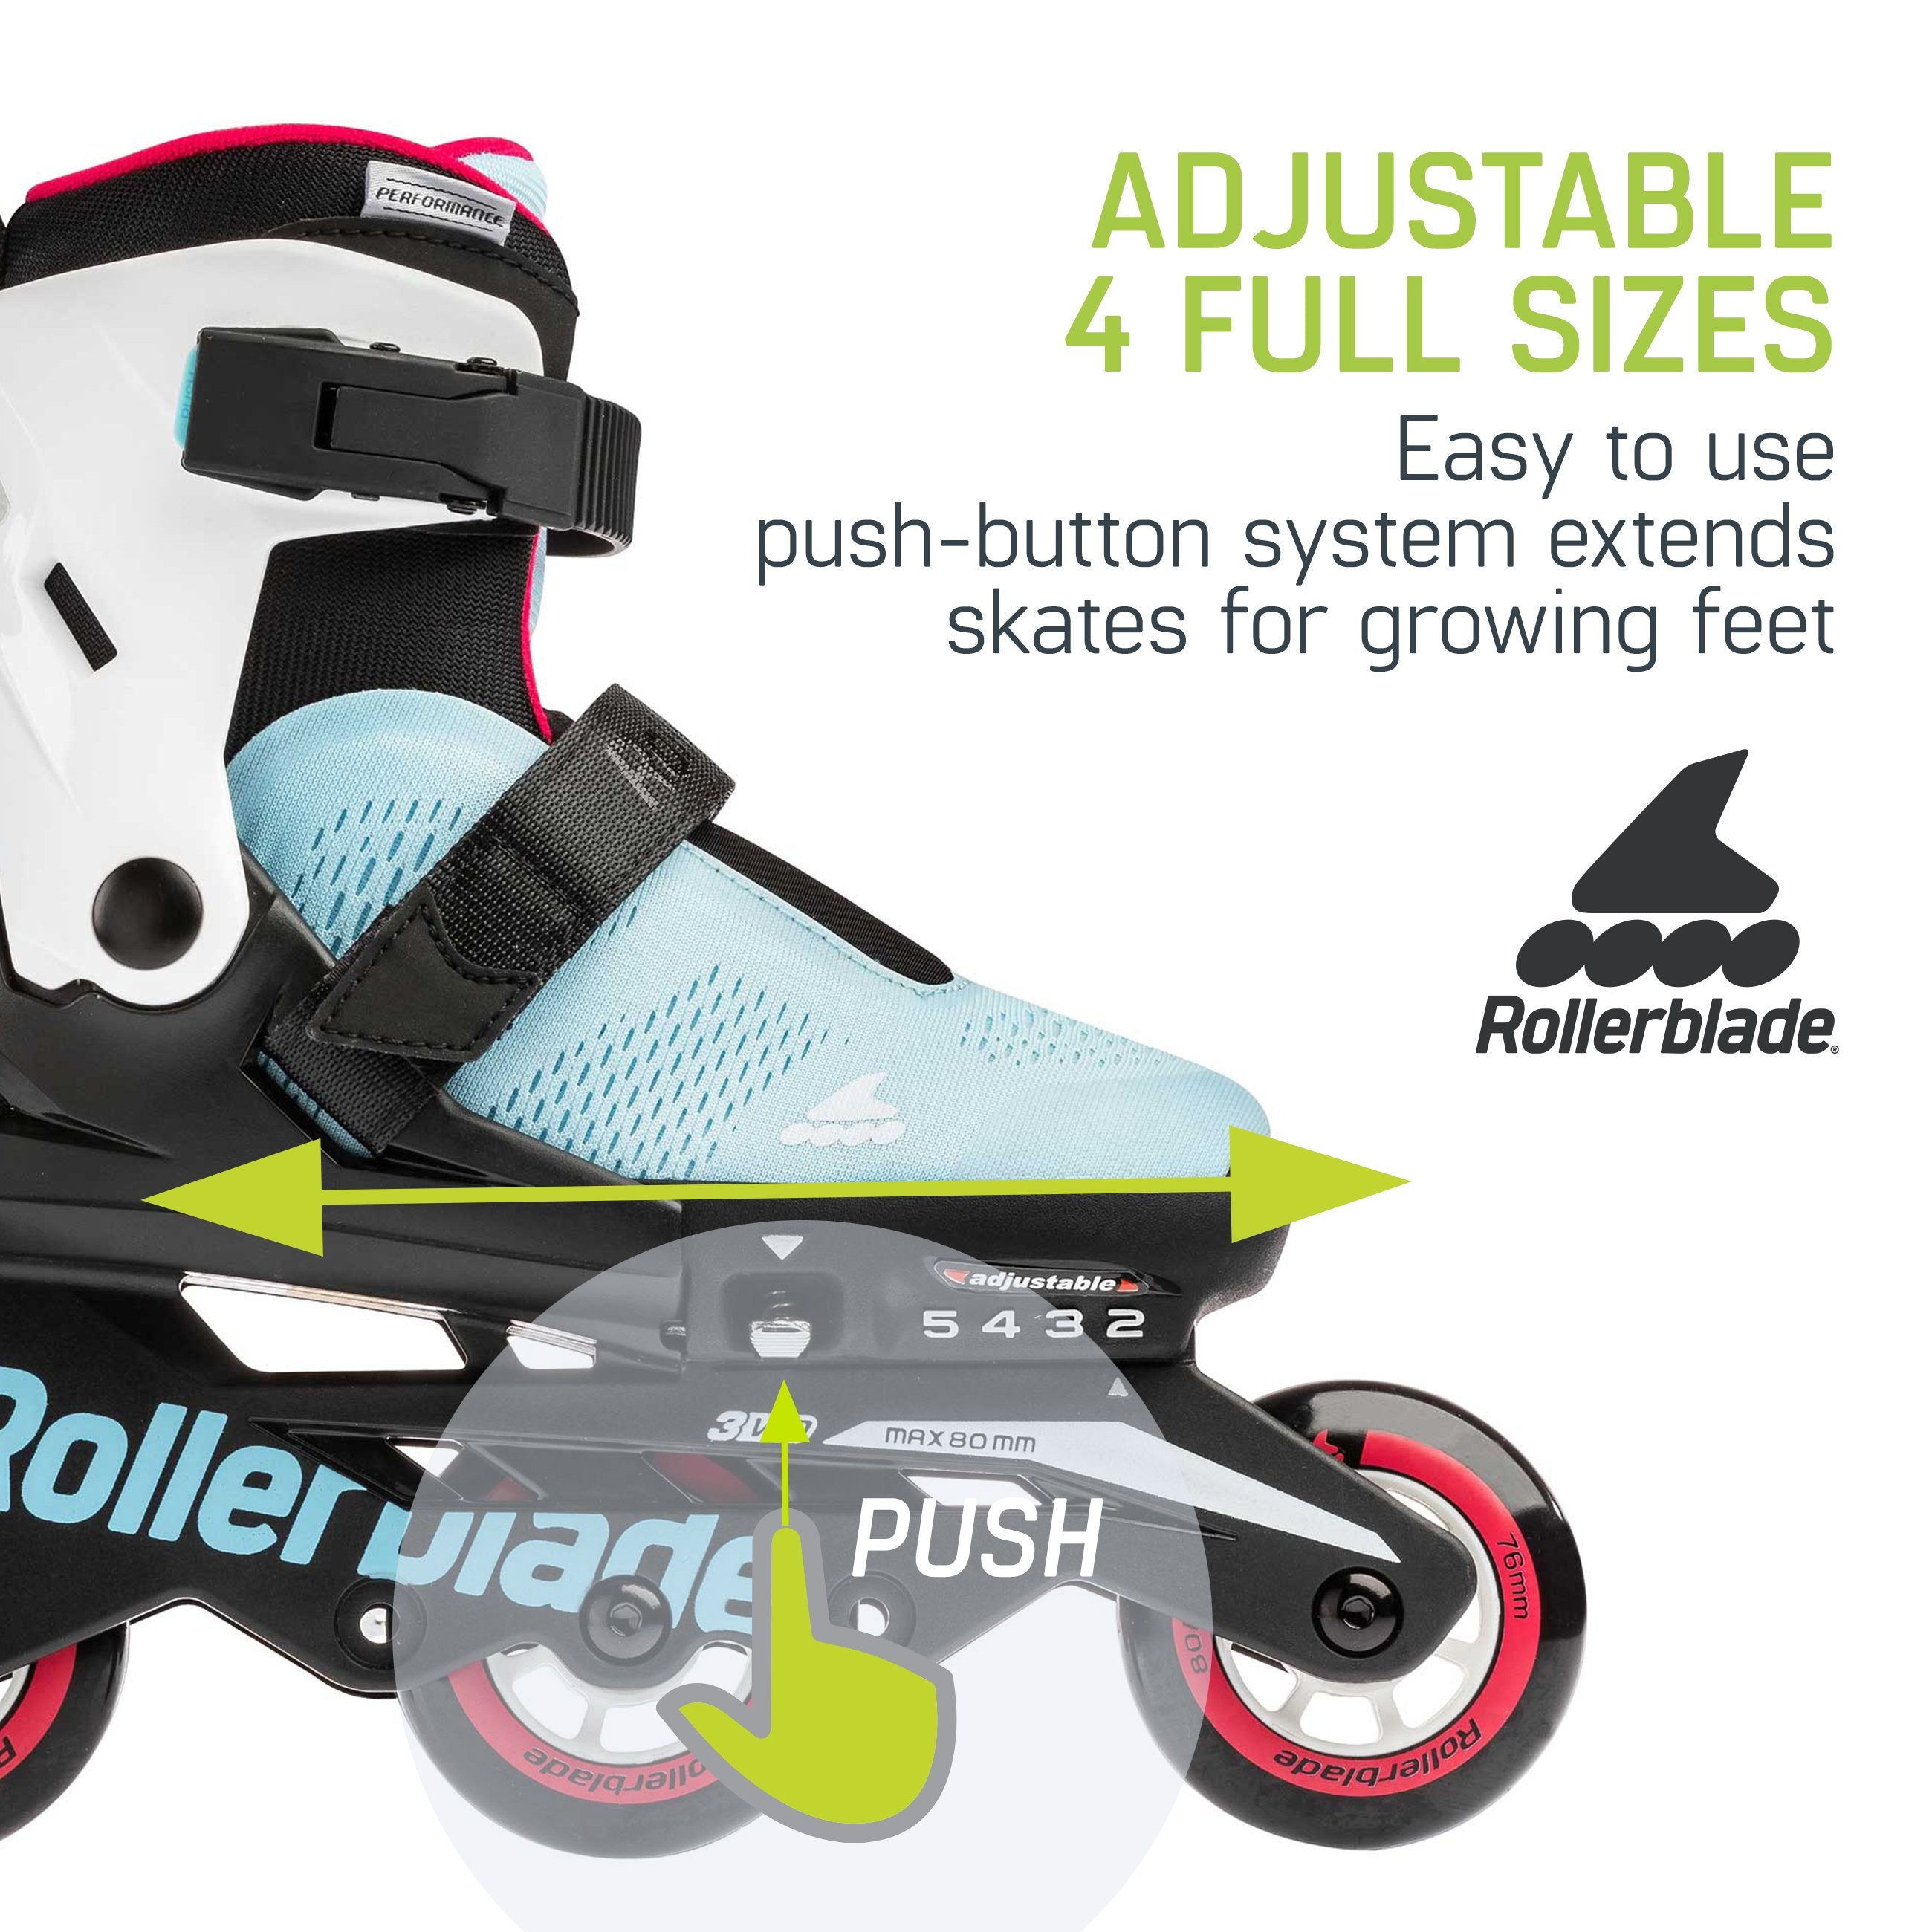 rollerblade-microblade-3wd-skates-tutorial